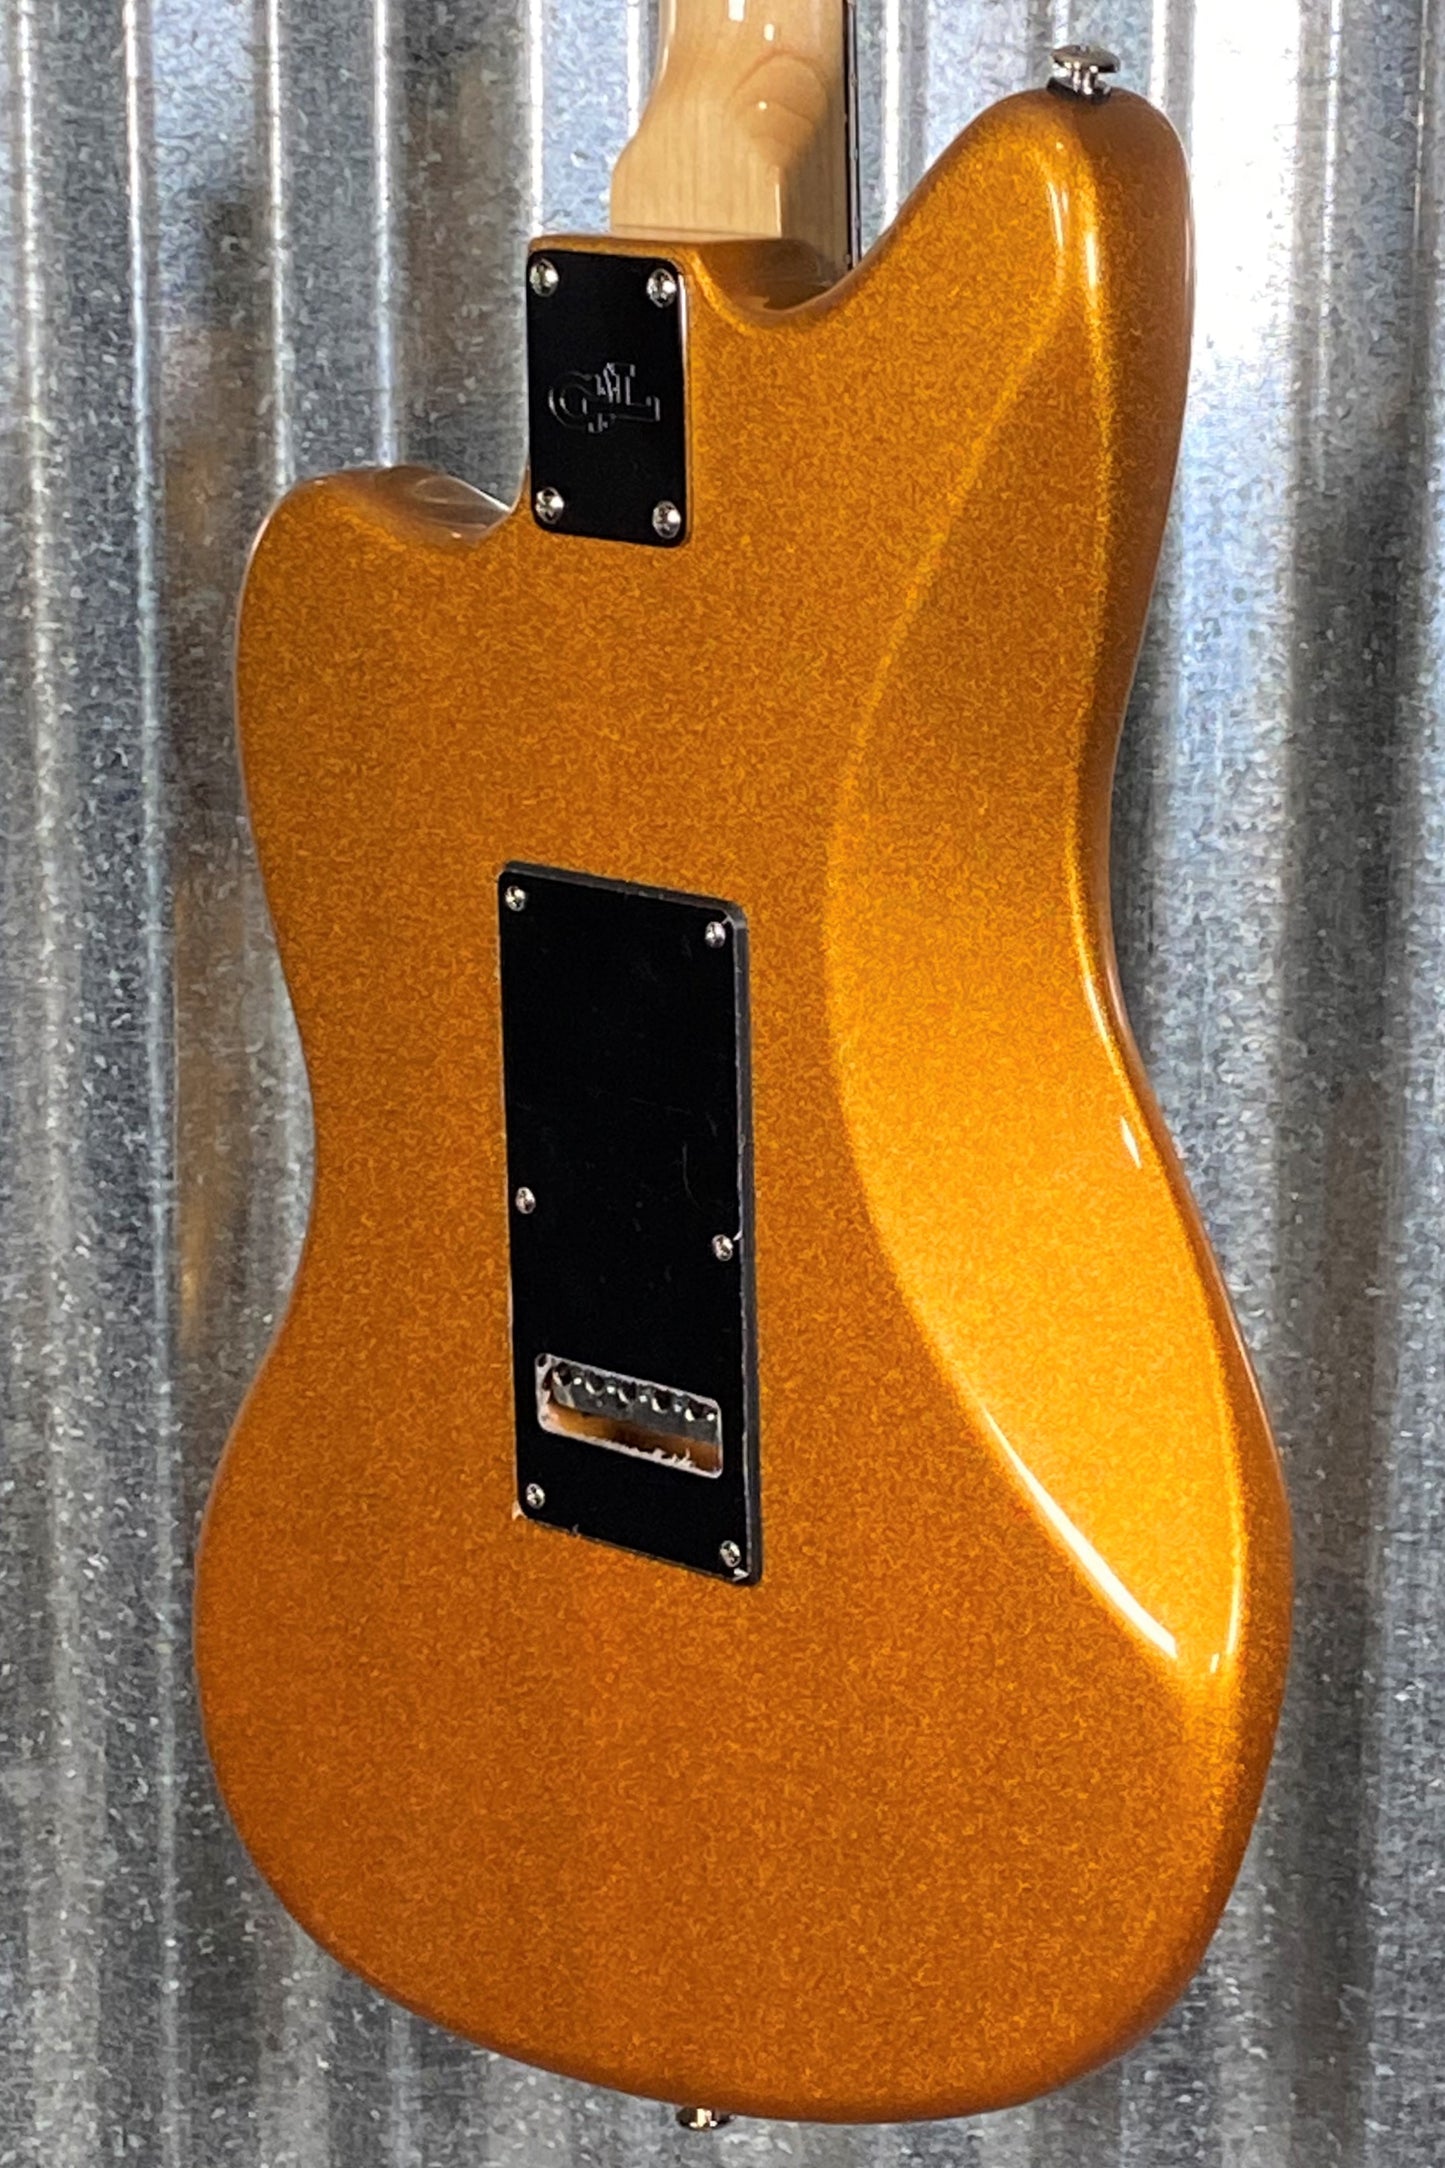 G&L USA CLF Research Doheny V12 Pharaoh Gold Guitar & Case #7151 Demo